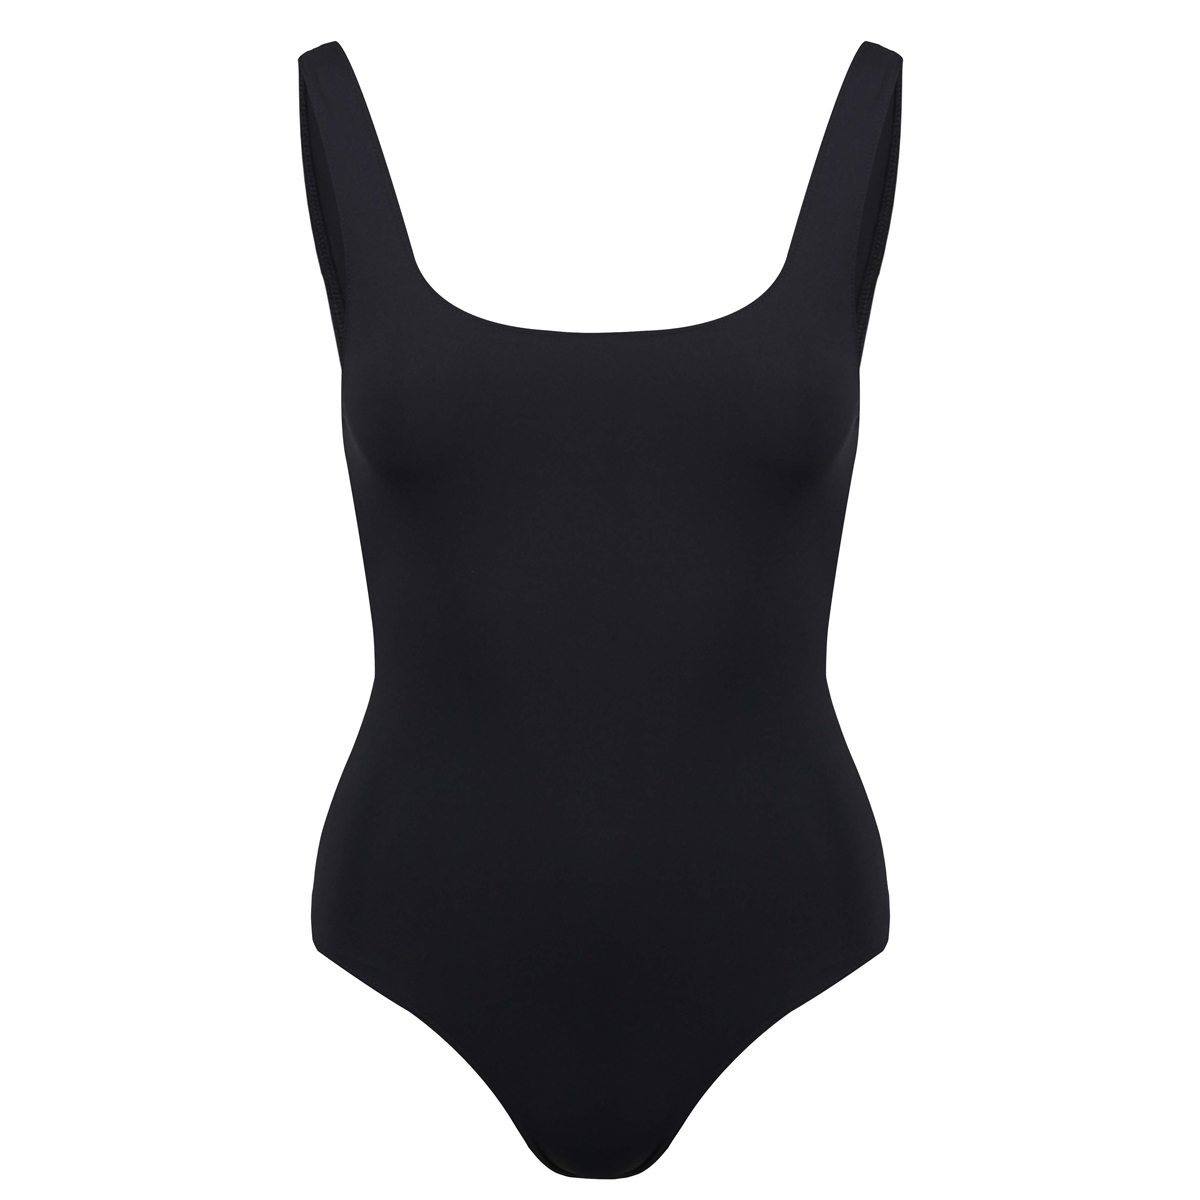 Davy J | Stylish, Active, Sustainable Swimwear - The Classic Black Swimsuit